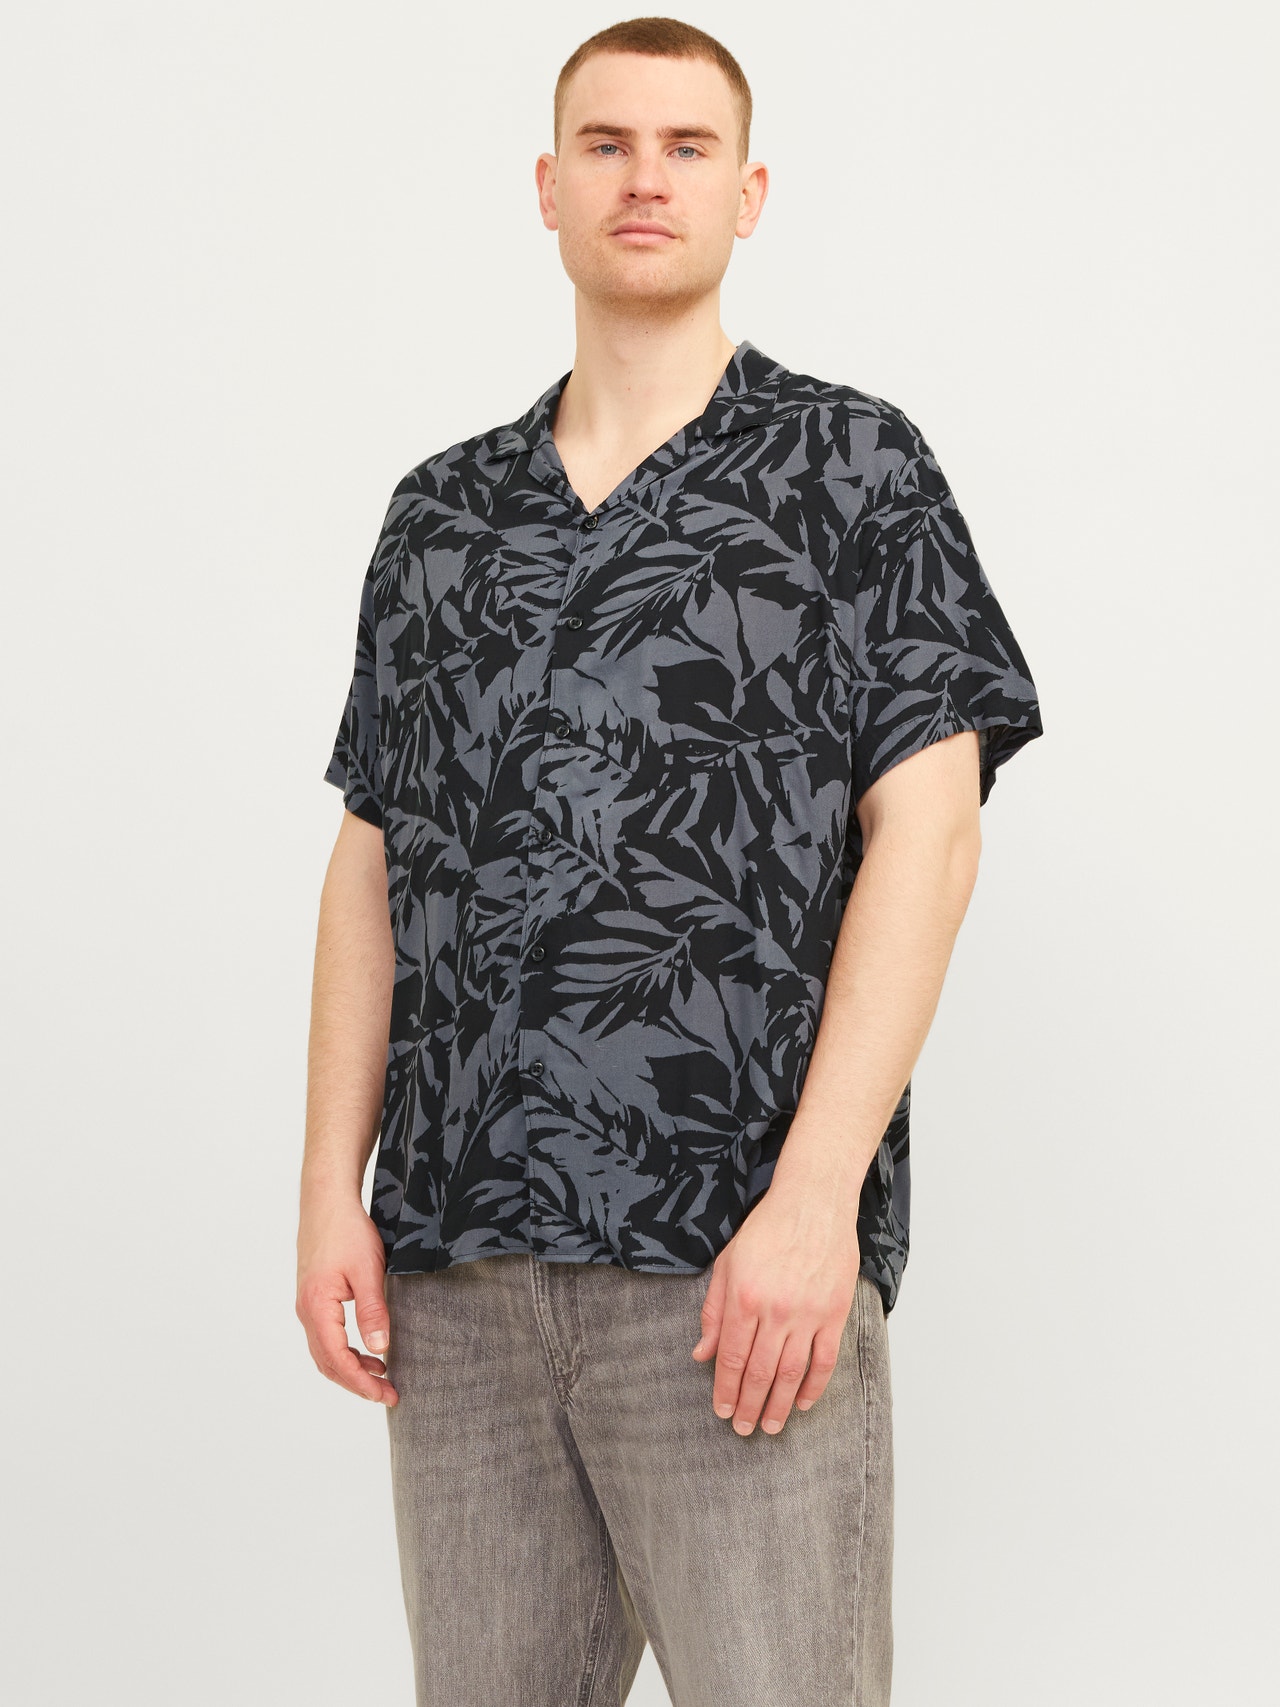 Jack & Jones Plus Size Relaxed Fit Overhemd -Asphalt - 12254833